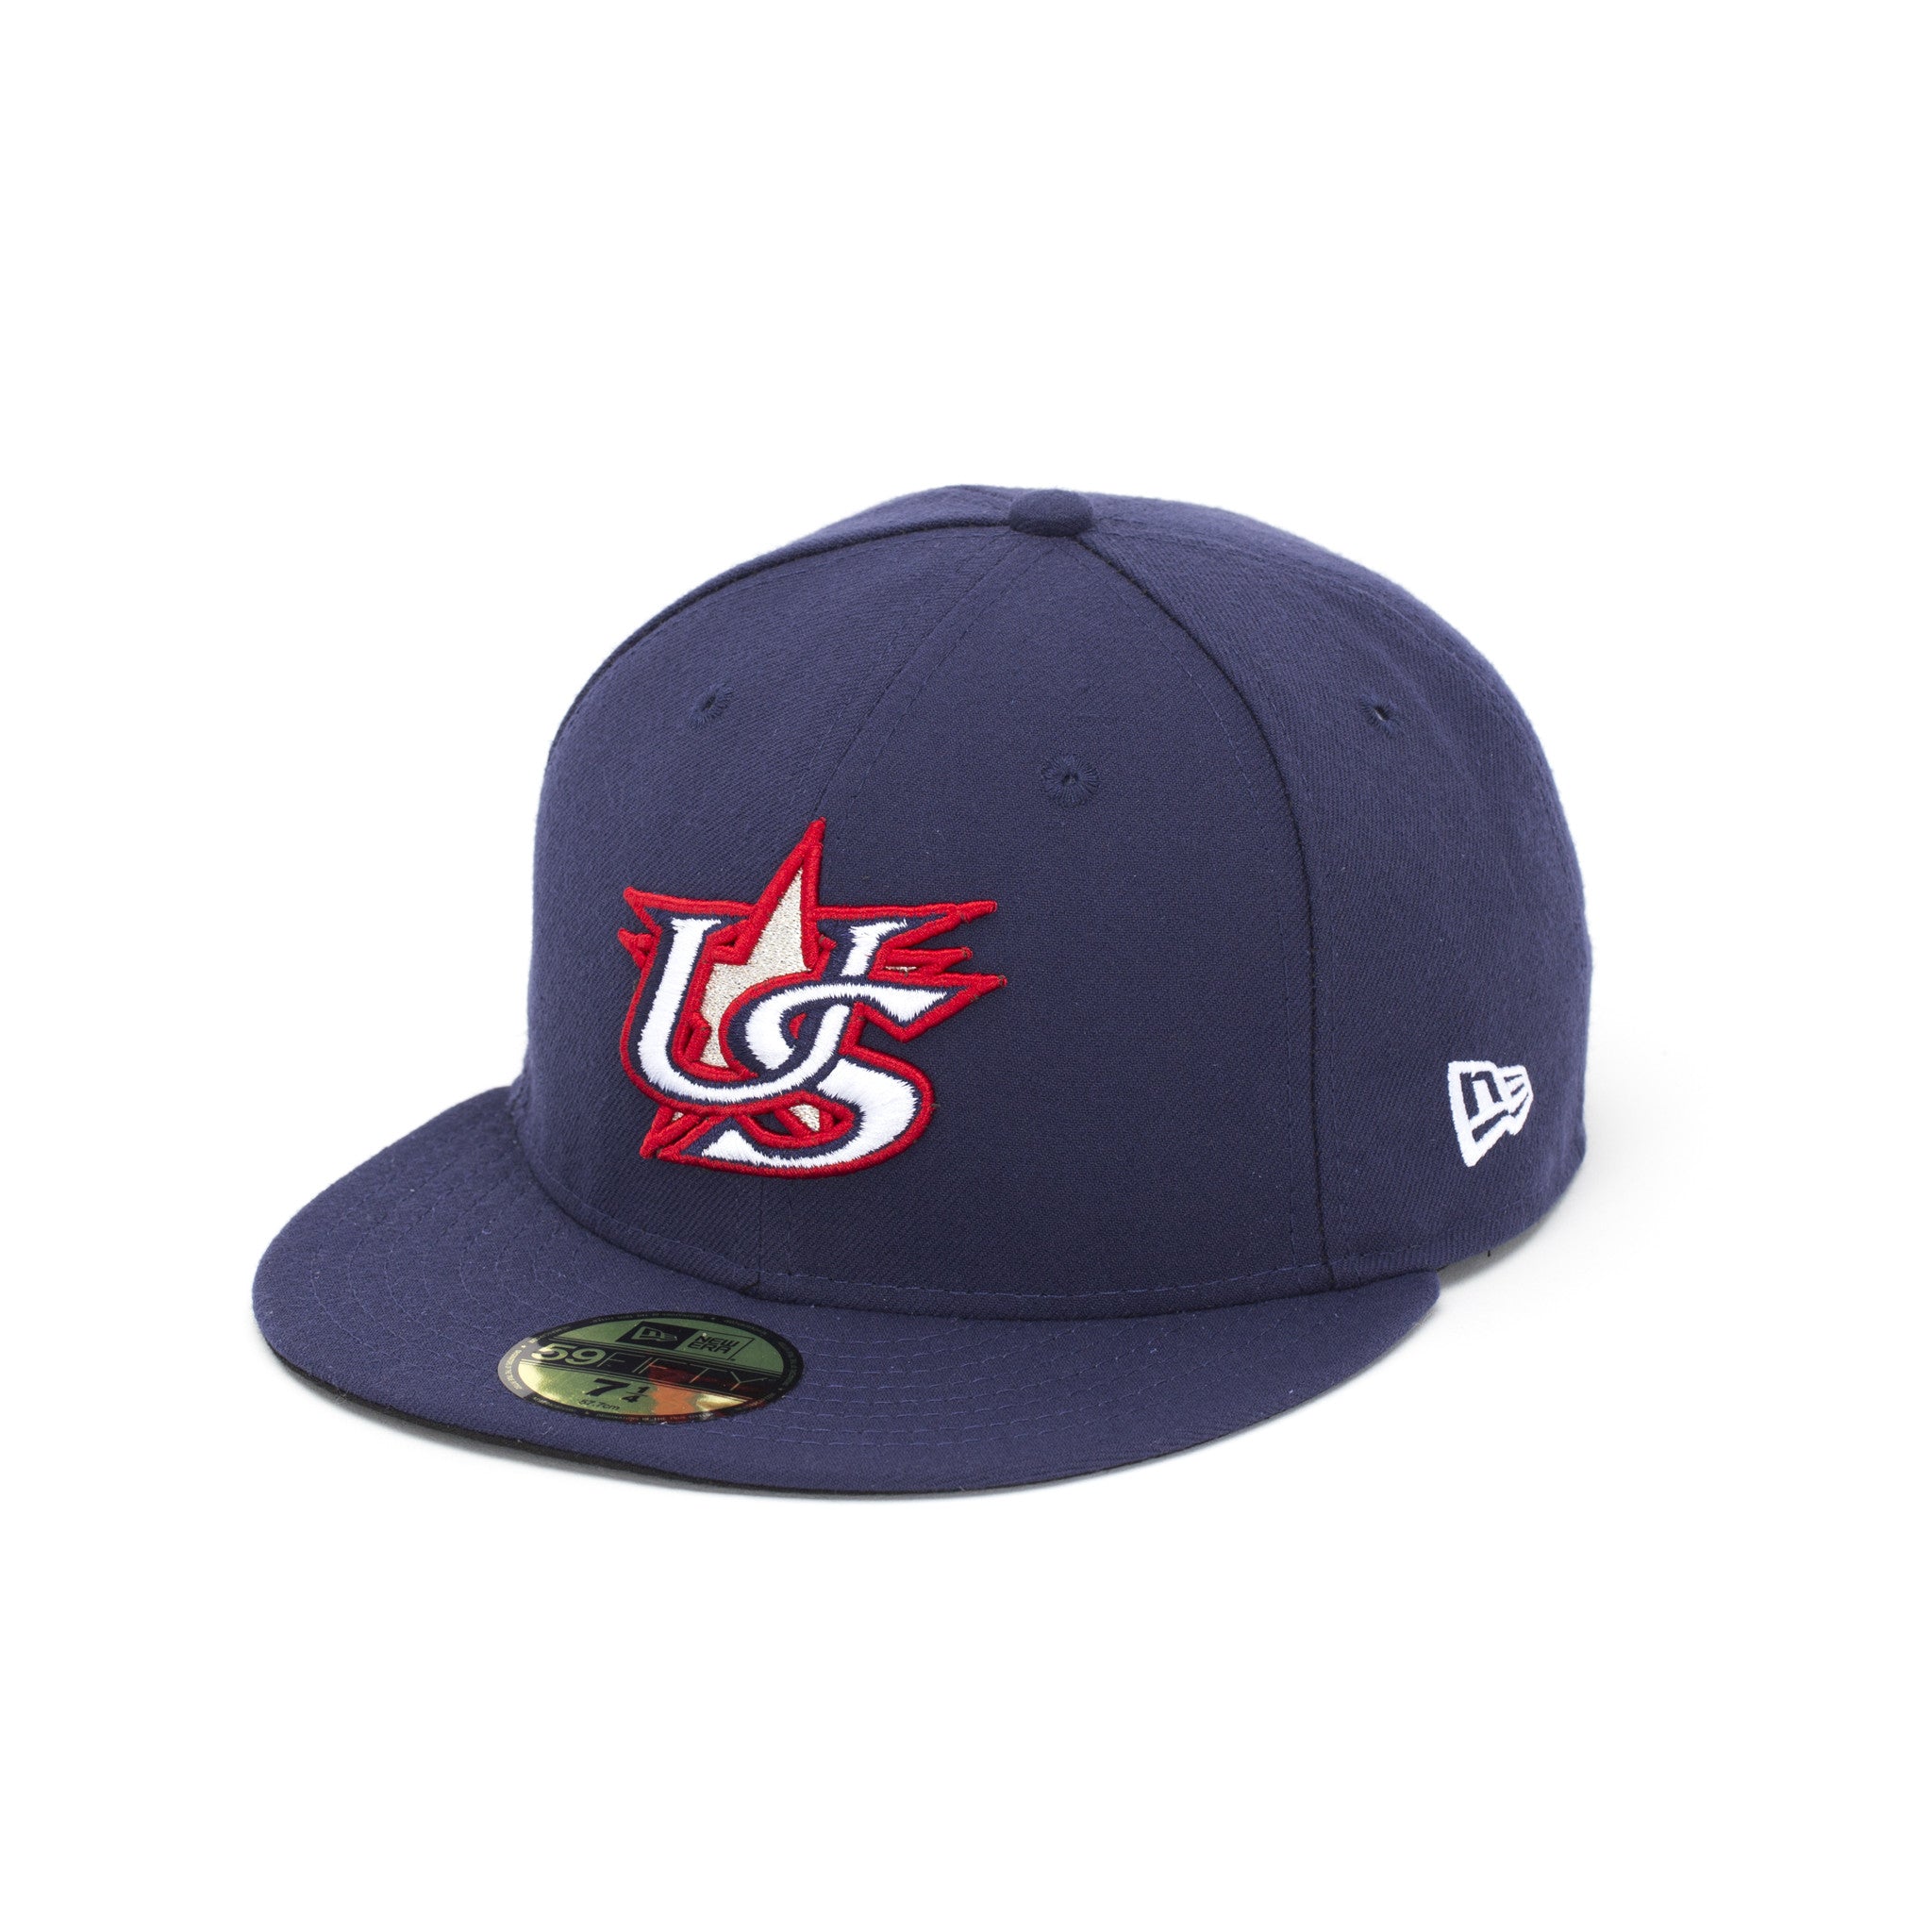 Home Game Cap 59FIFTY | USA Baseball Shop